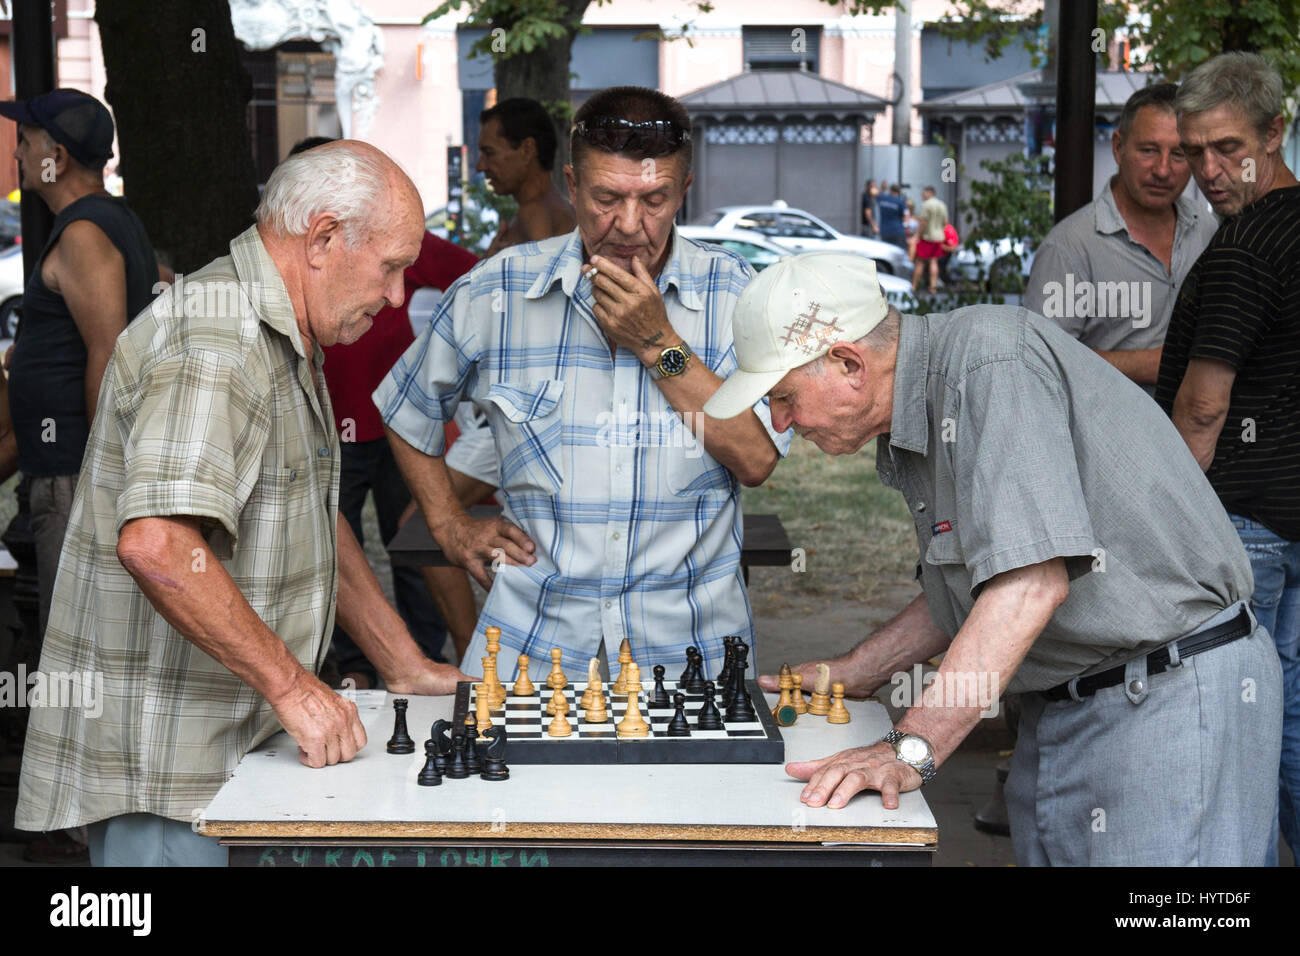 ODESSA, UKRAINE - AUGUST 14, 2015: Old men playing chess in a park of Odessa, Ukraine  Picture of aged men playing chess in one of Odessa's main parks Stock Photo